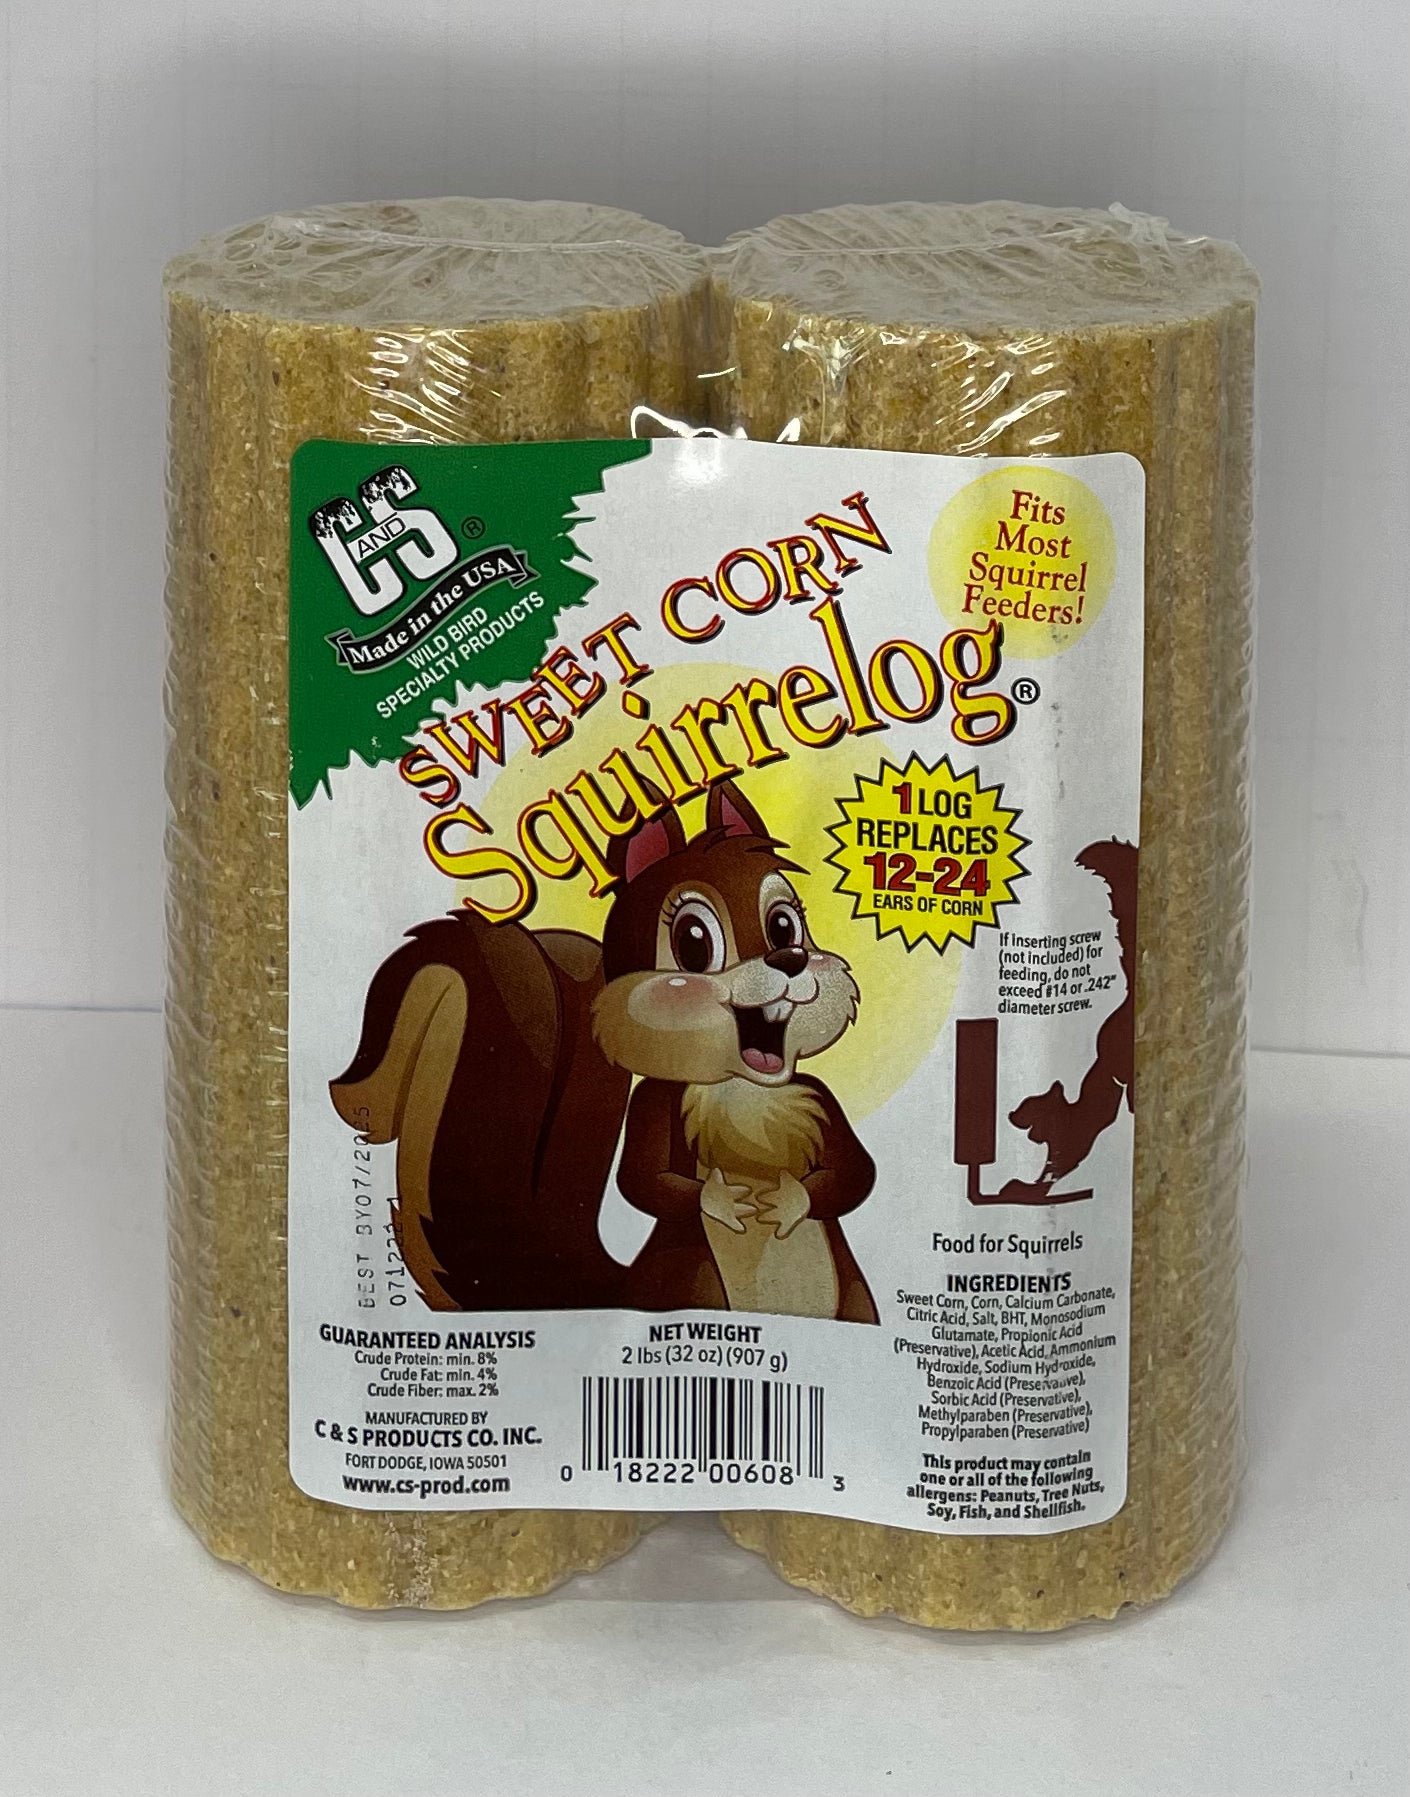 Sweet Corn Squirrelog 2 Pack